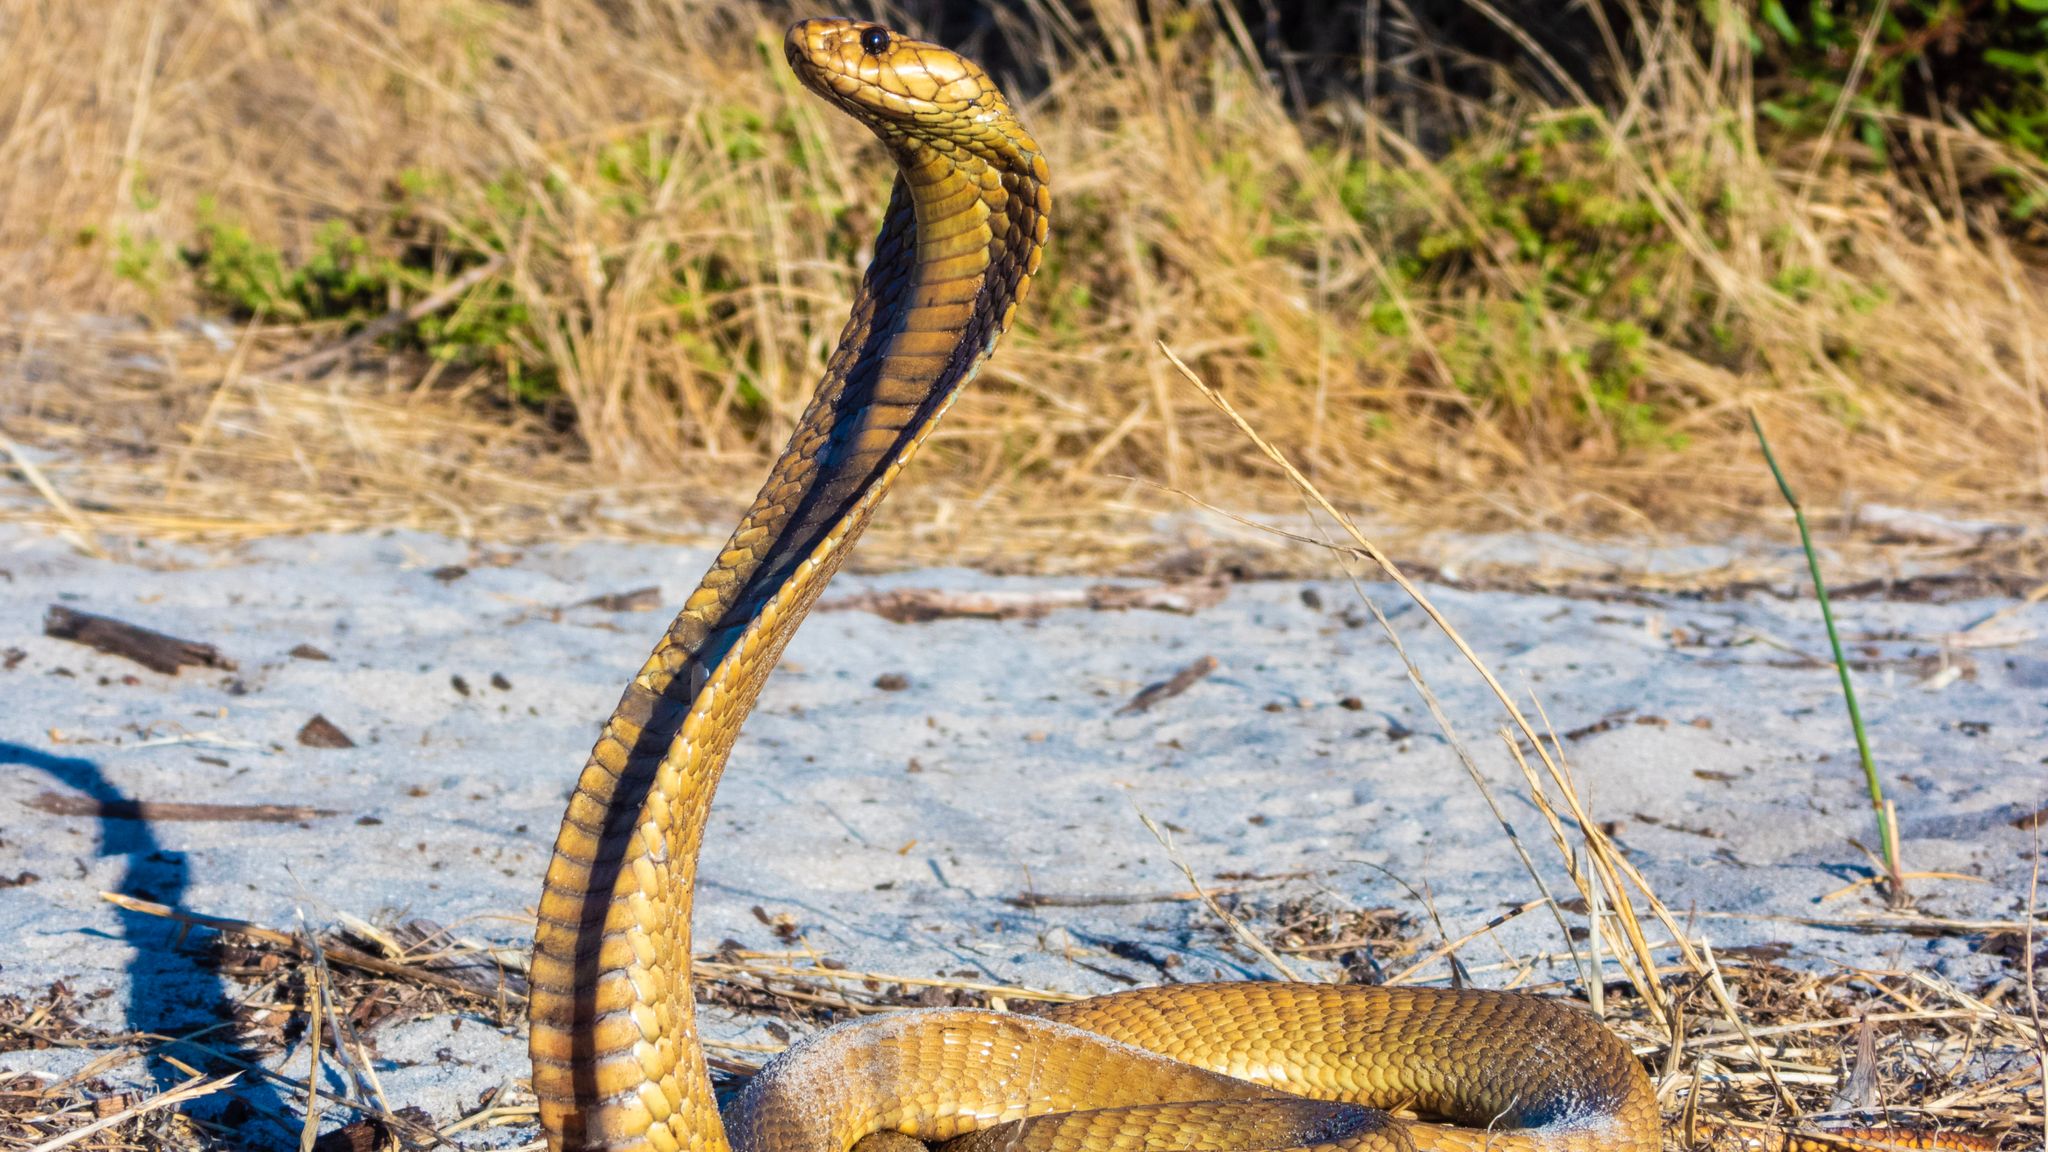 Snake on a plane: Highly venomous cobra found under pilot's seat, World  News